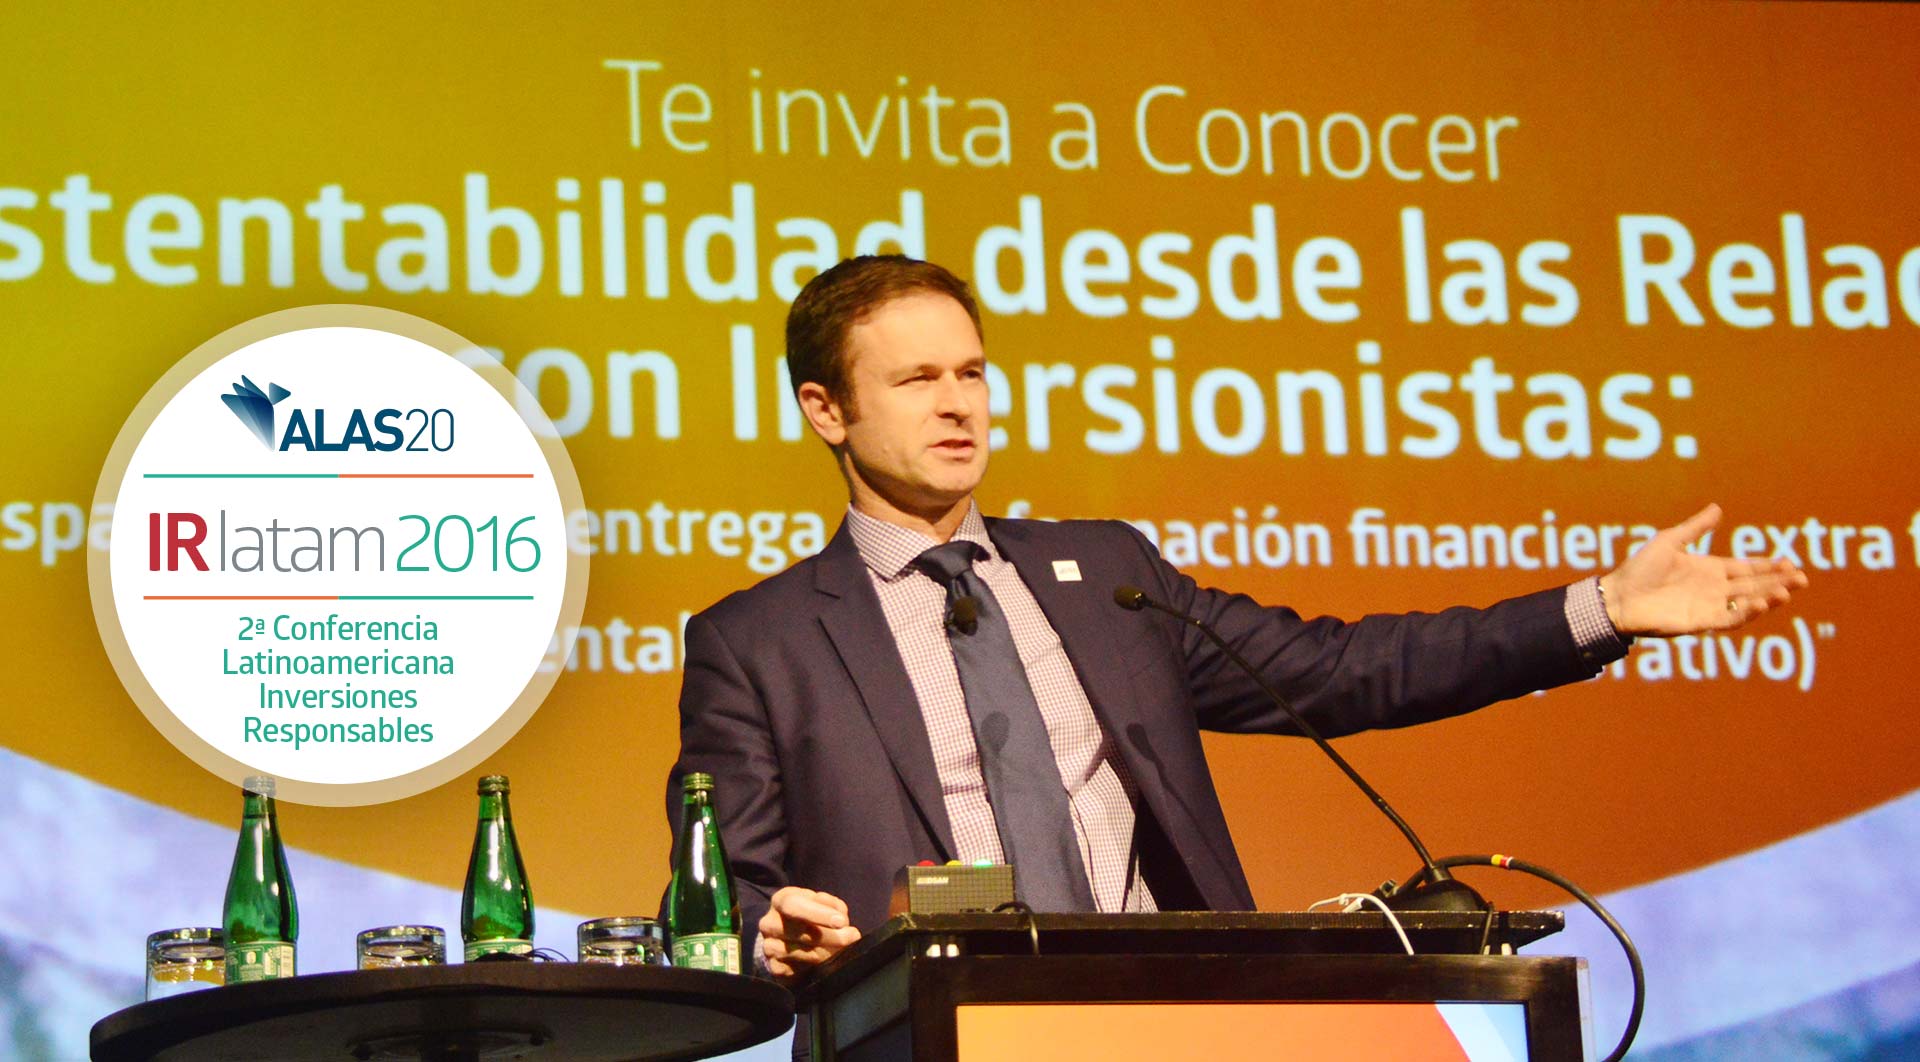 IR Latam 2016: 2ª Conferencia Latinoamericana de Inversiones Responsables